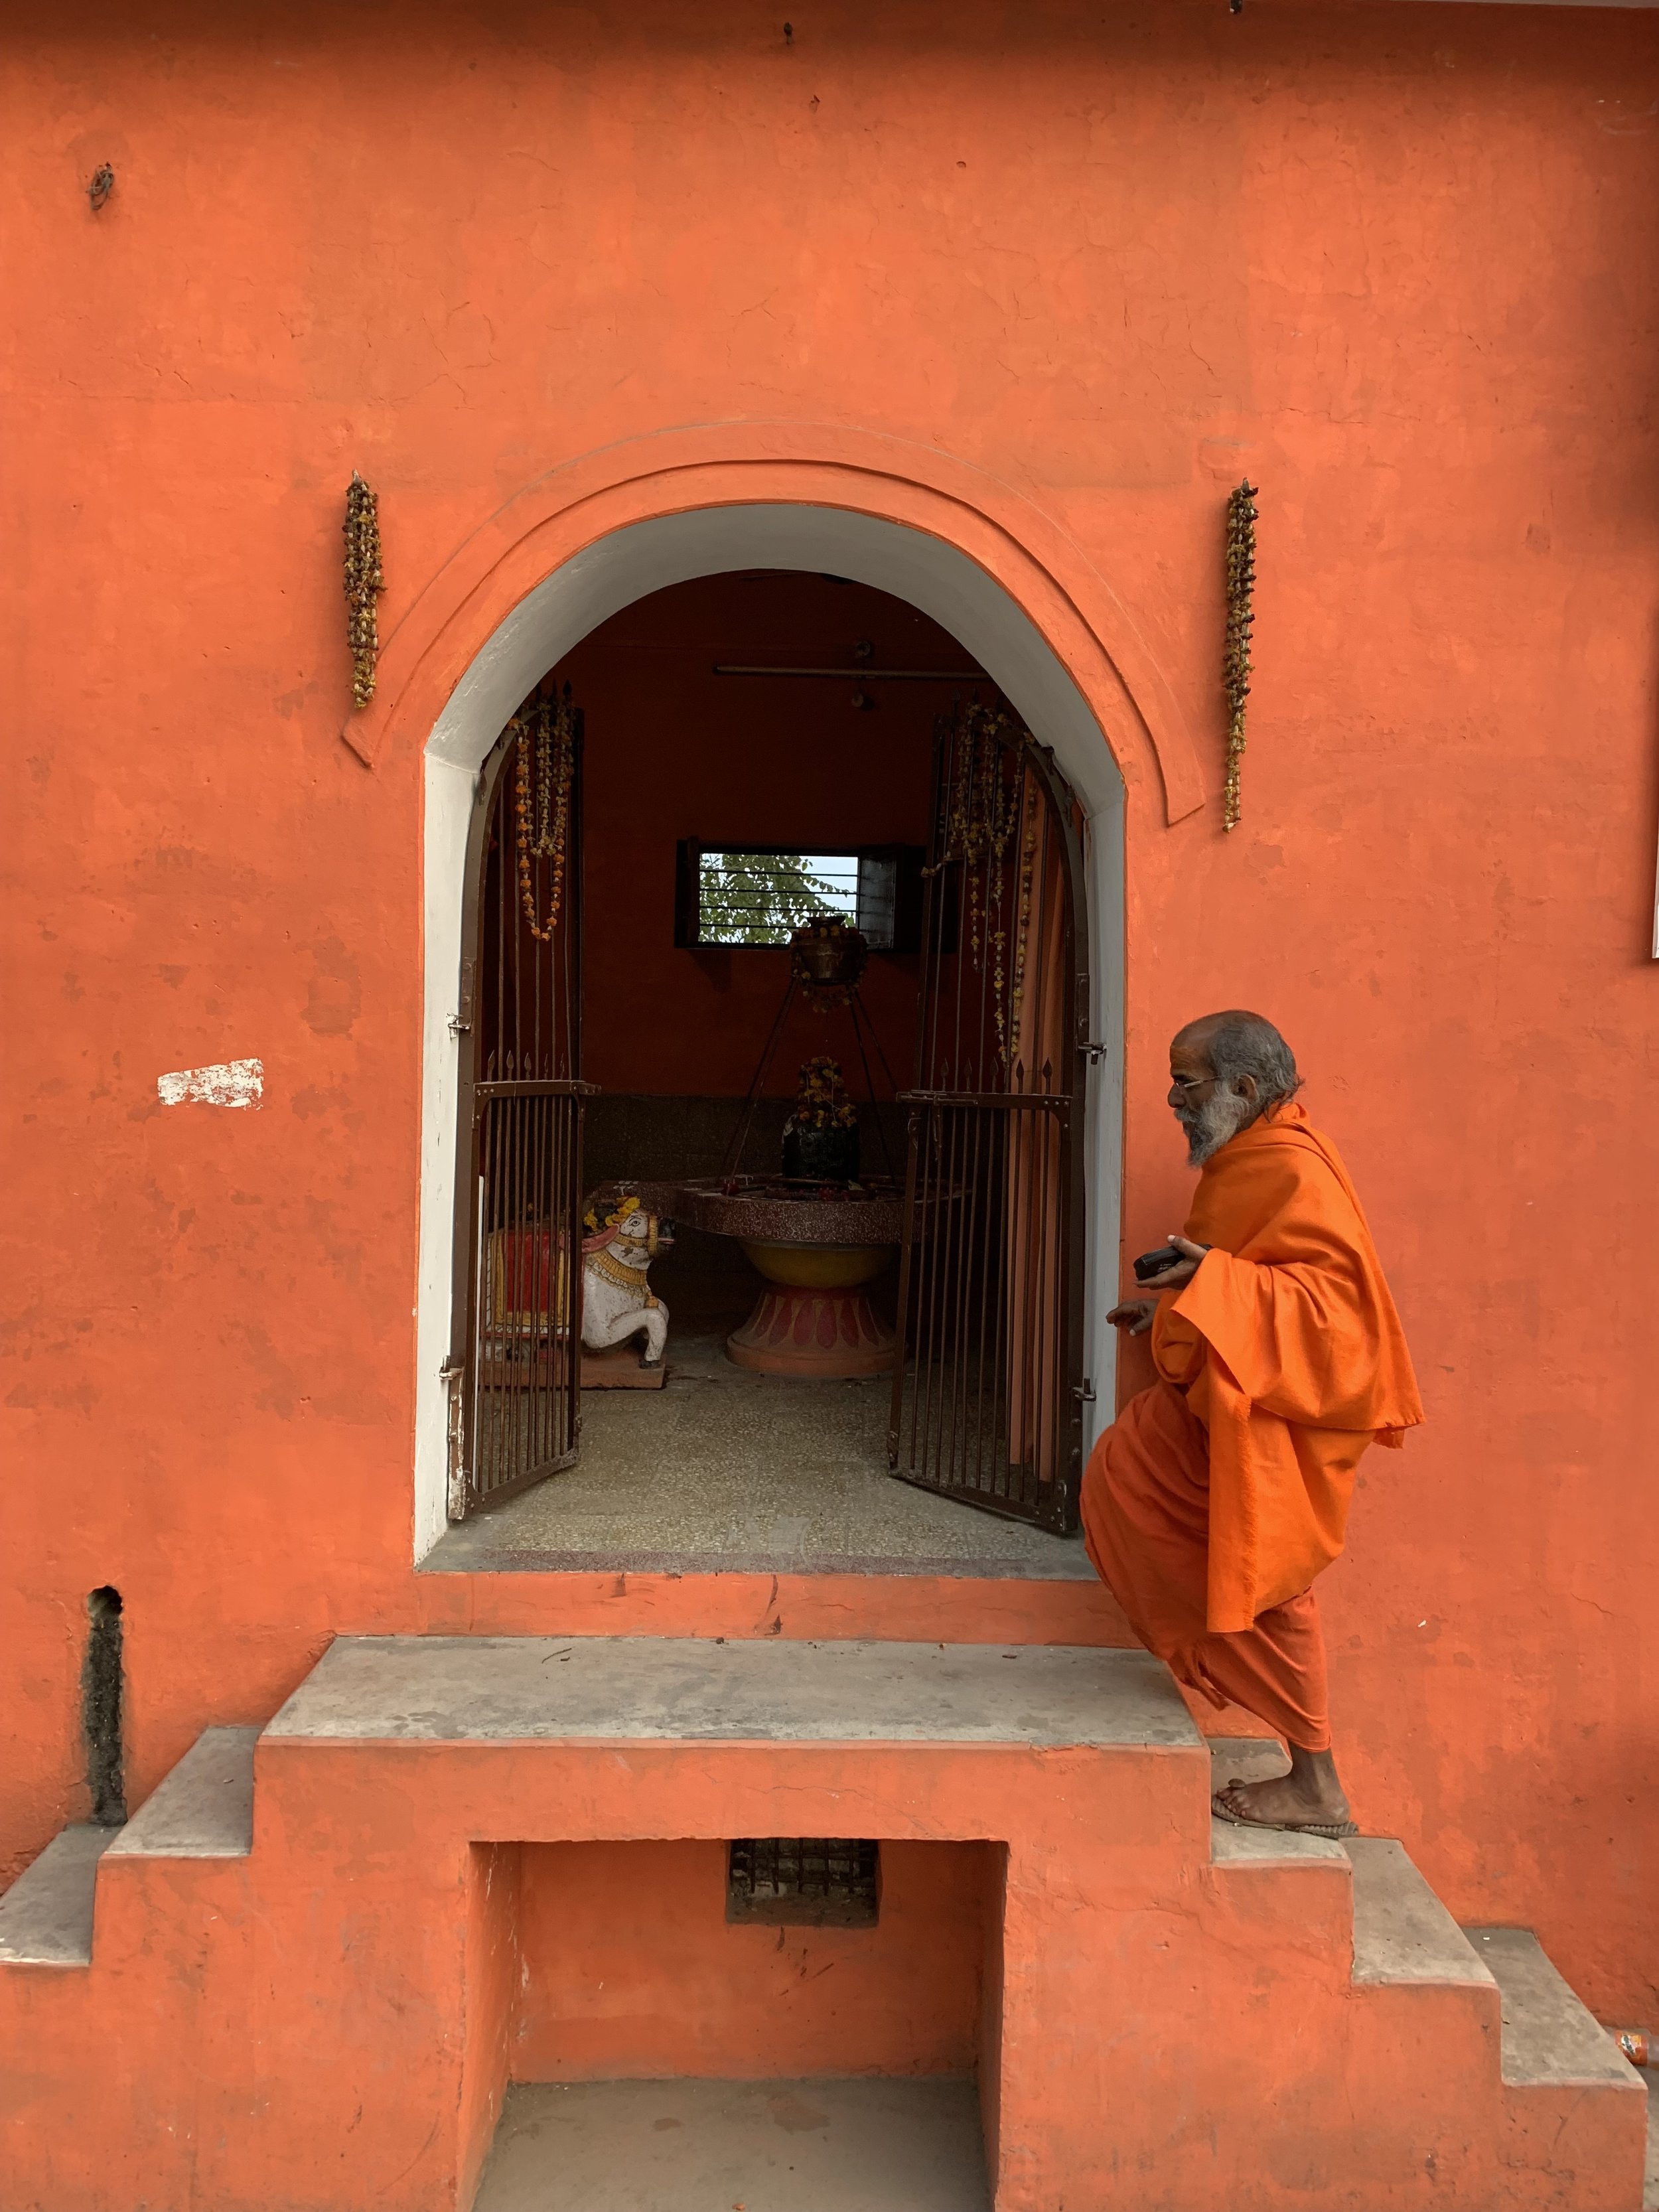  Guru enters a Hindu temple that he upkeeps. 